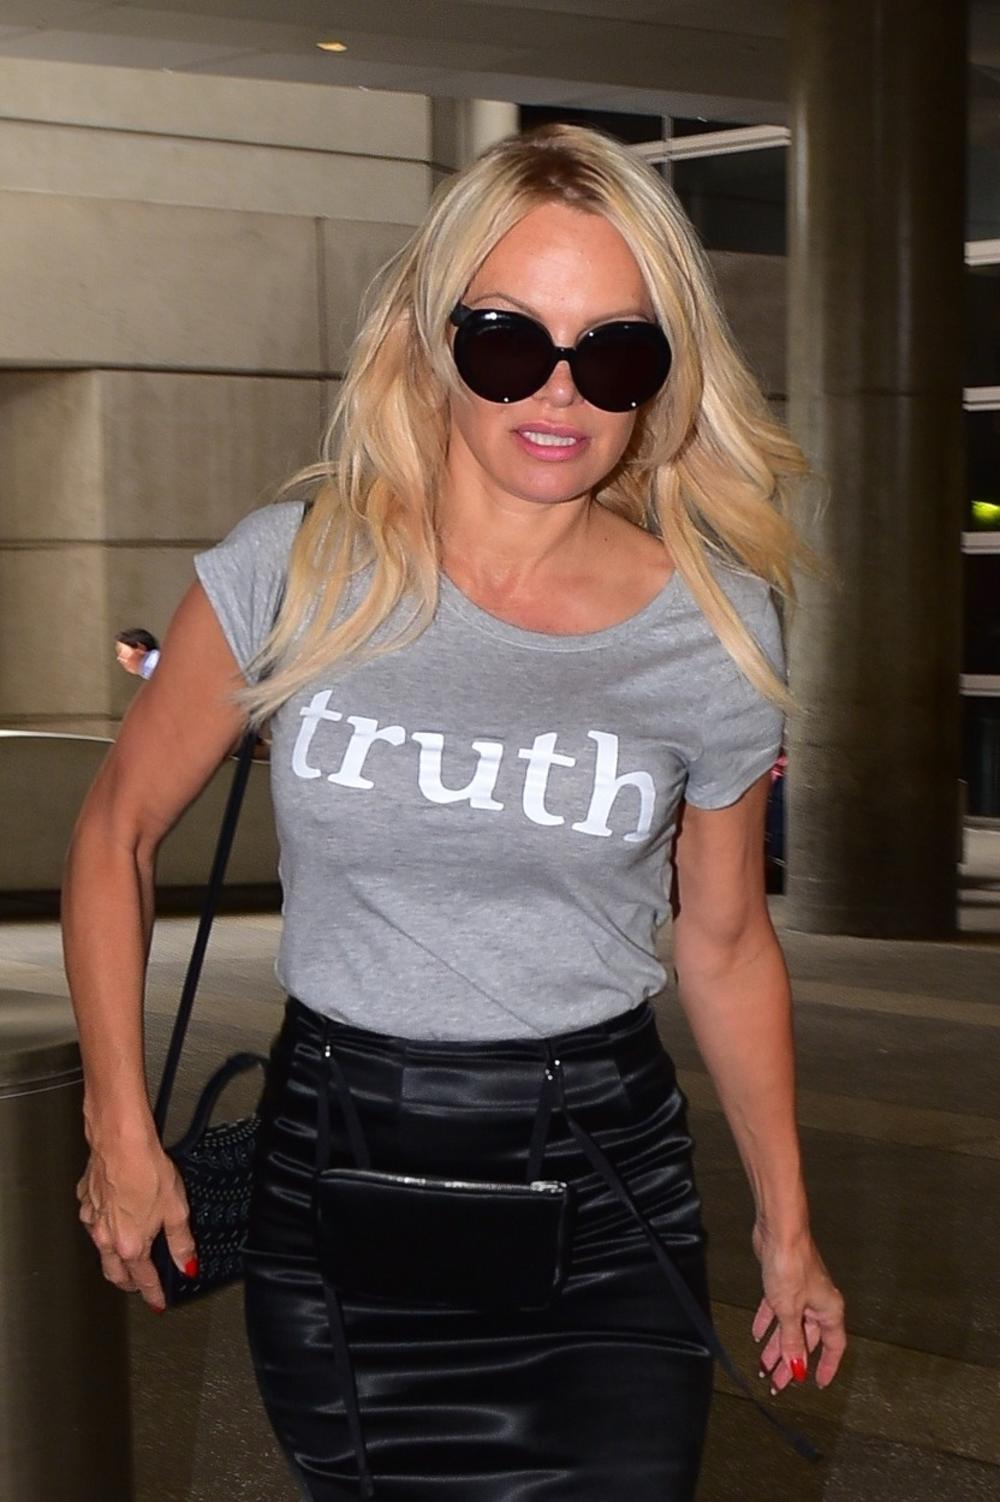 <p><strong>Pamela Anderson </strong>šokirala je javnost kada je stupila u brak sa producentom <strong>Džonom Pitersom</strong>, a njihov razvod posle samo 12 dana braka bio je još veće iznenađenje!</p>